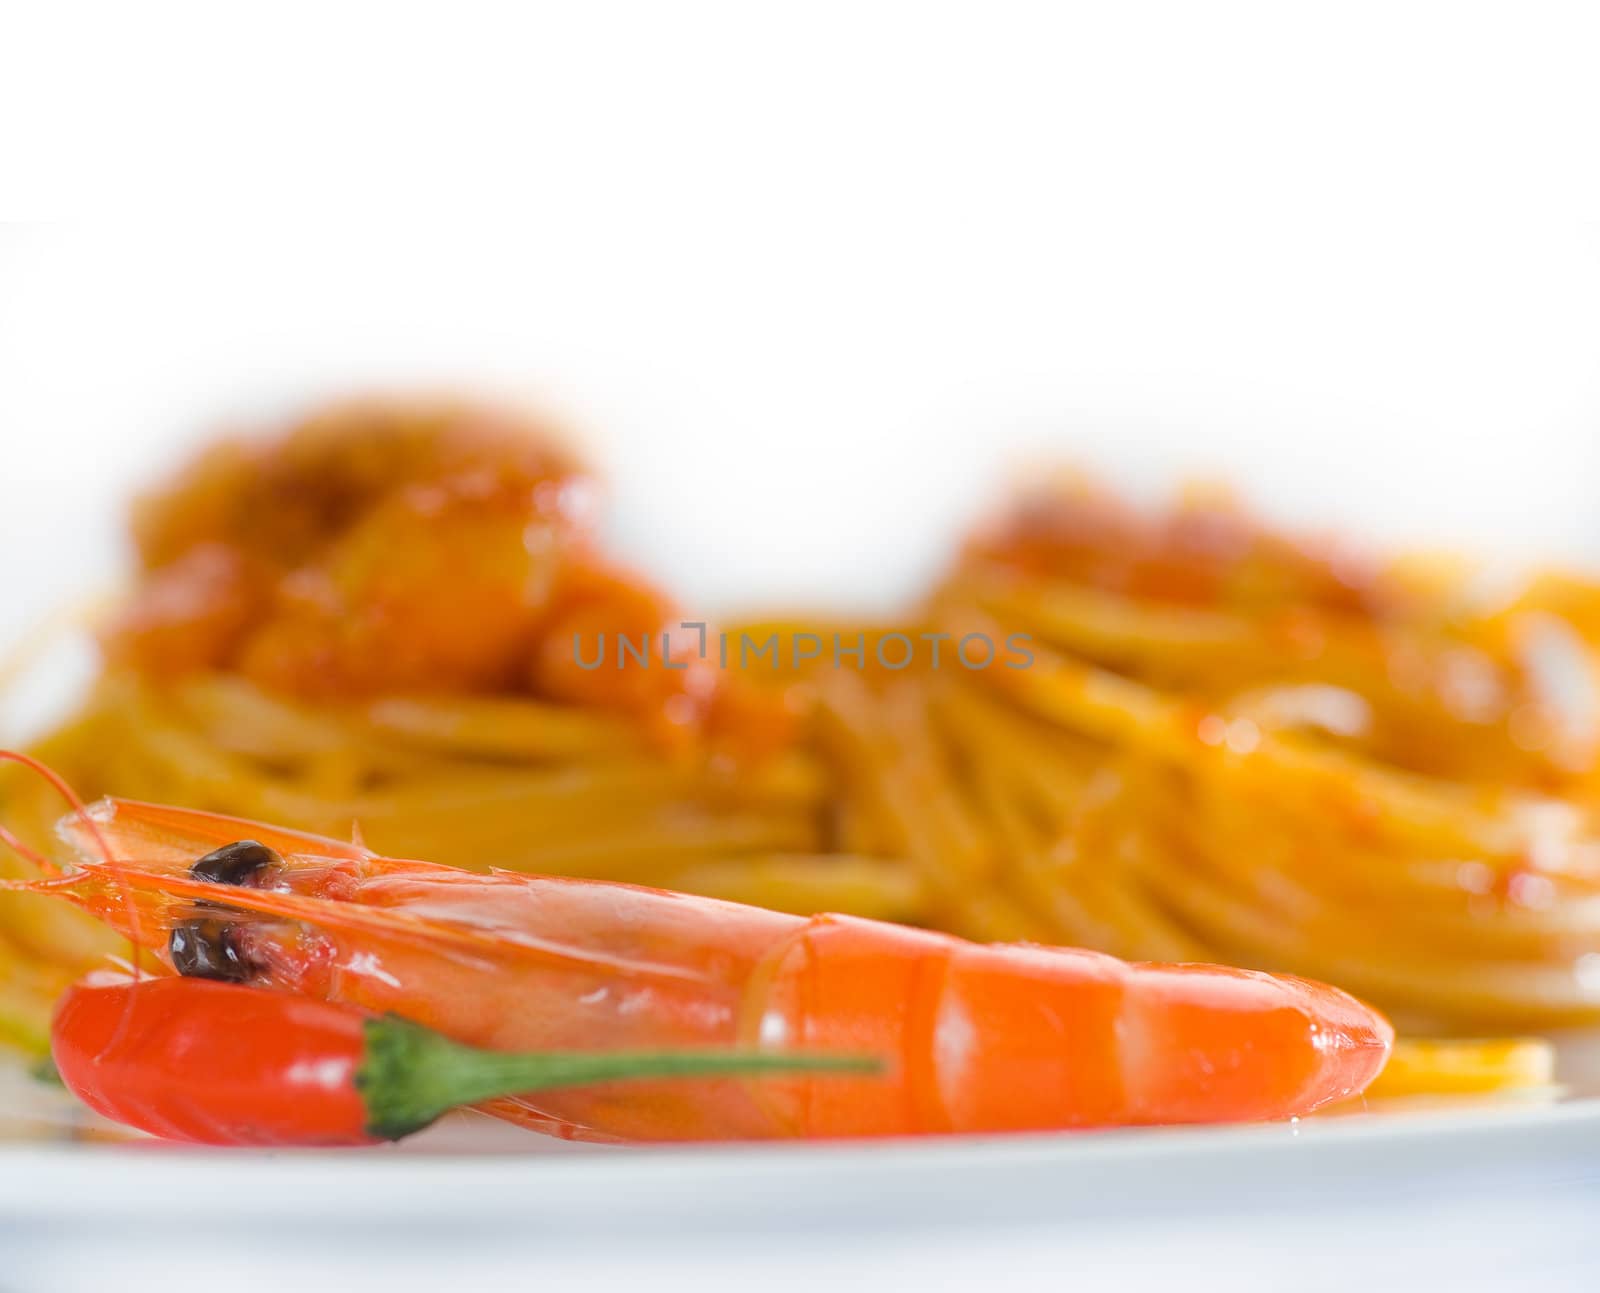 italian spaghetti pasta and fresh spicy shrimps sauce over white